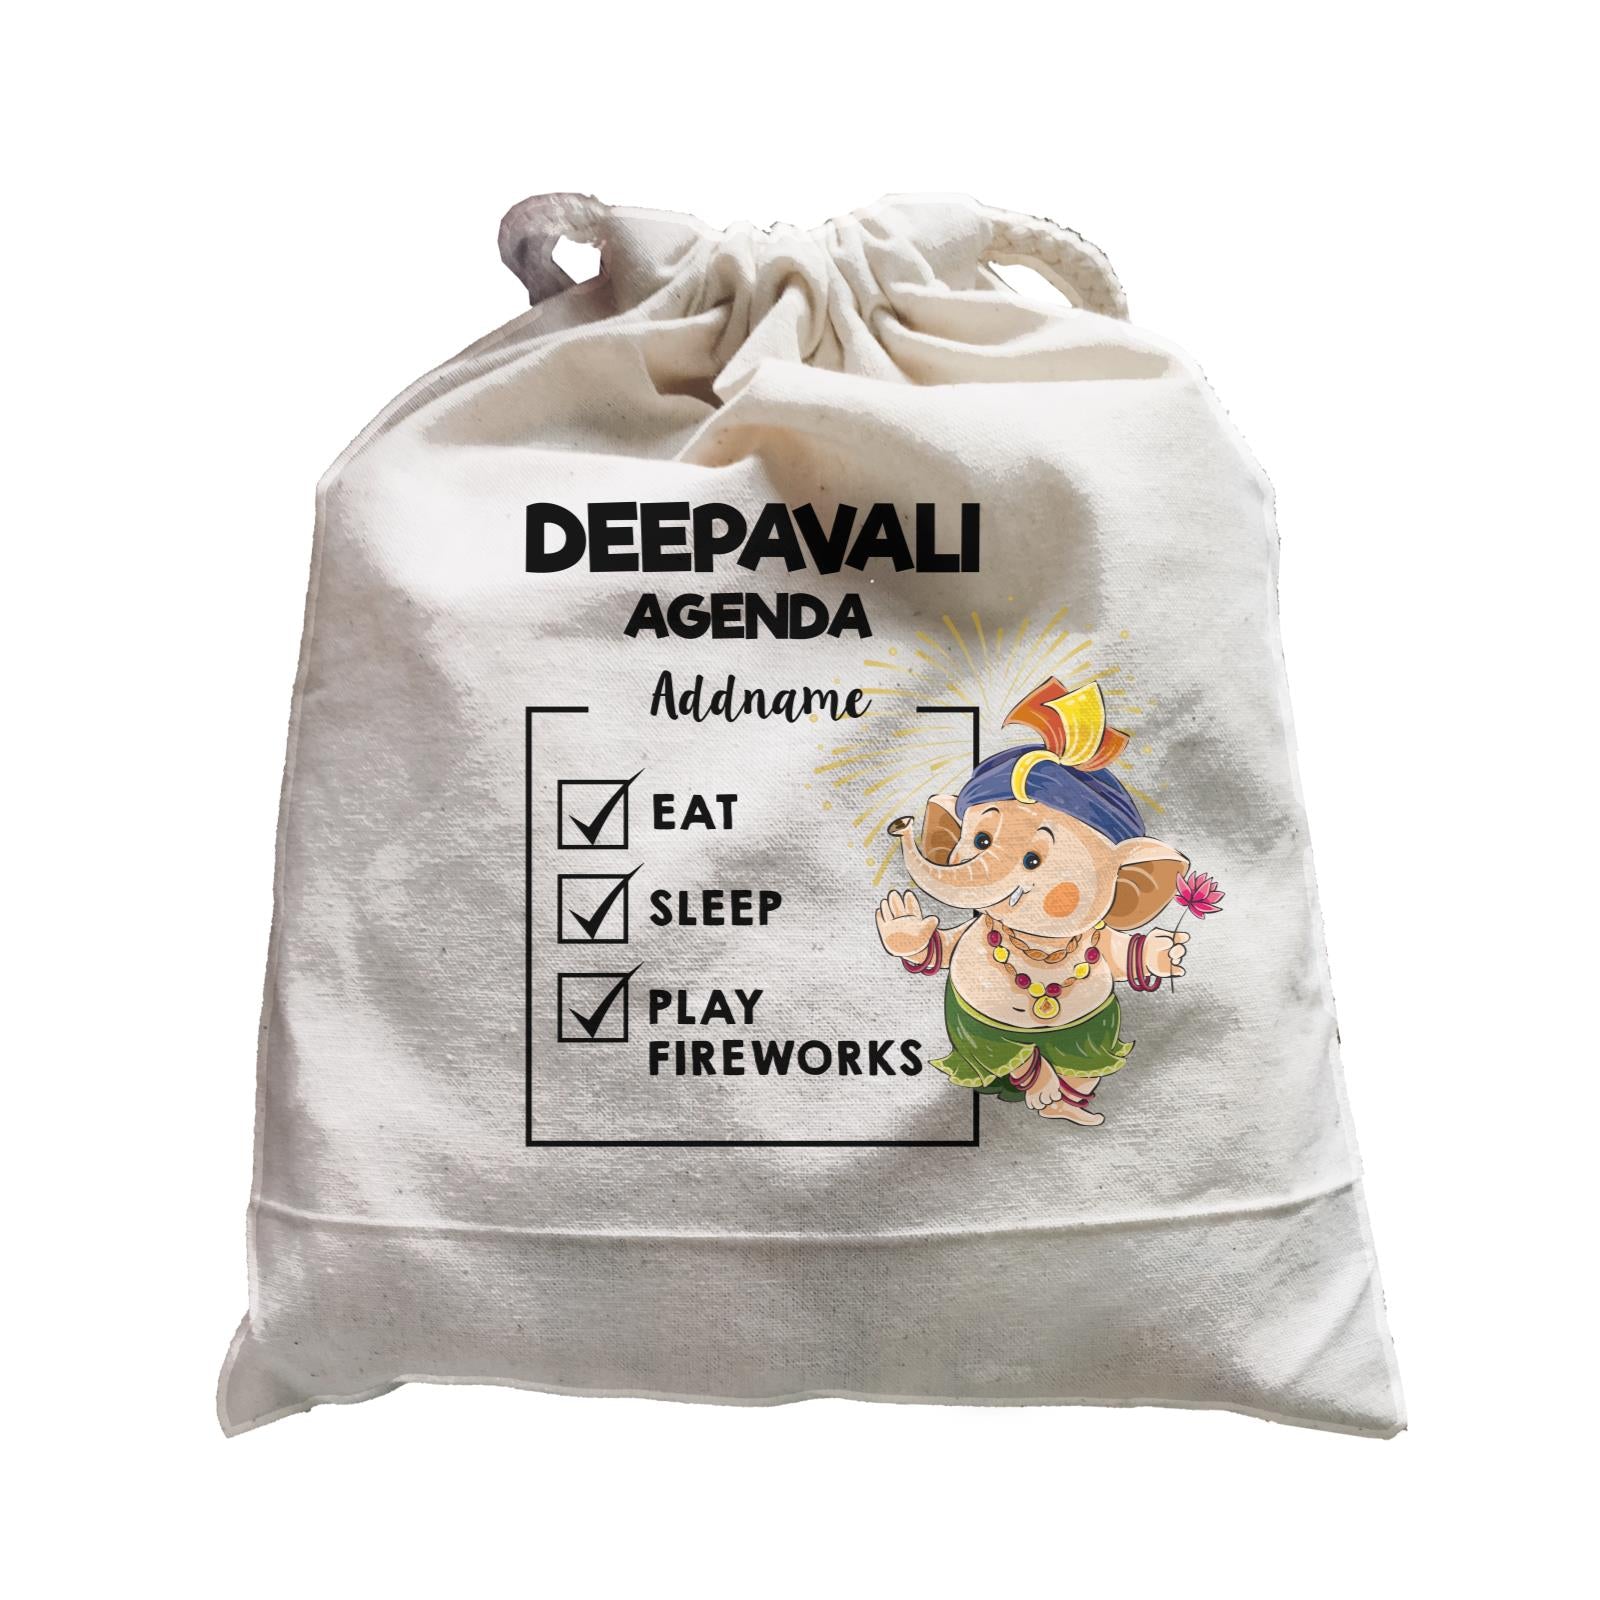 Cute Ganesha Fireworks Addname Deepavali Agenda Satchel